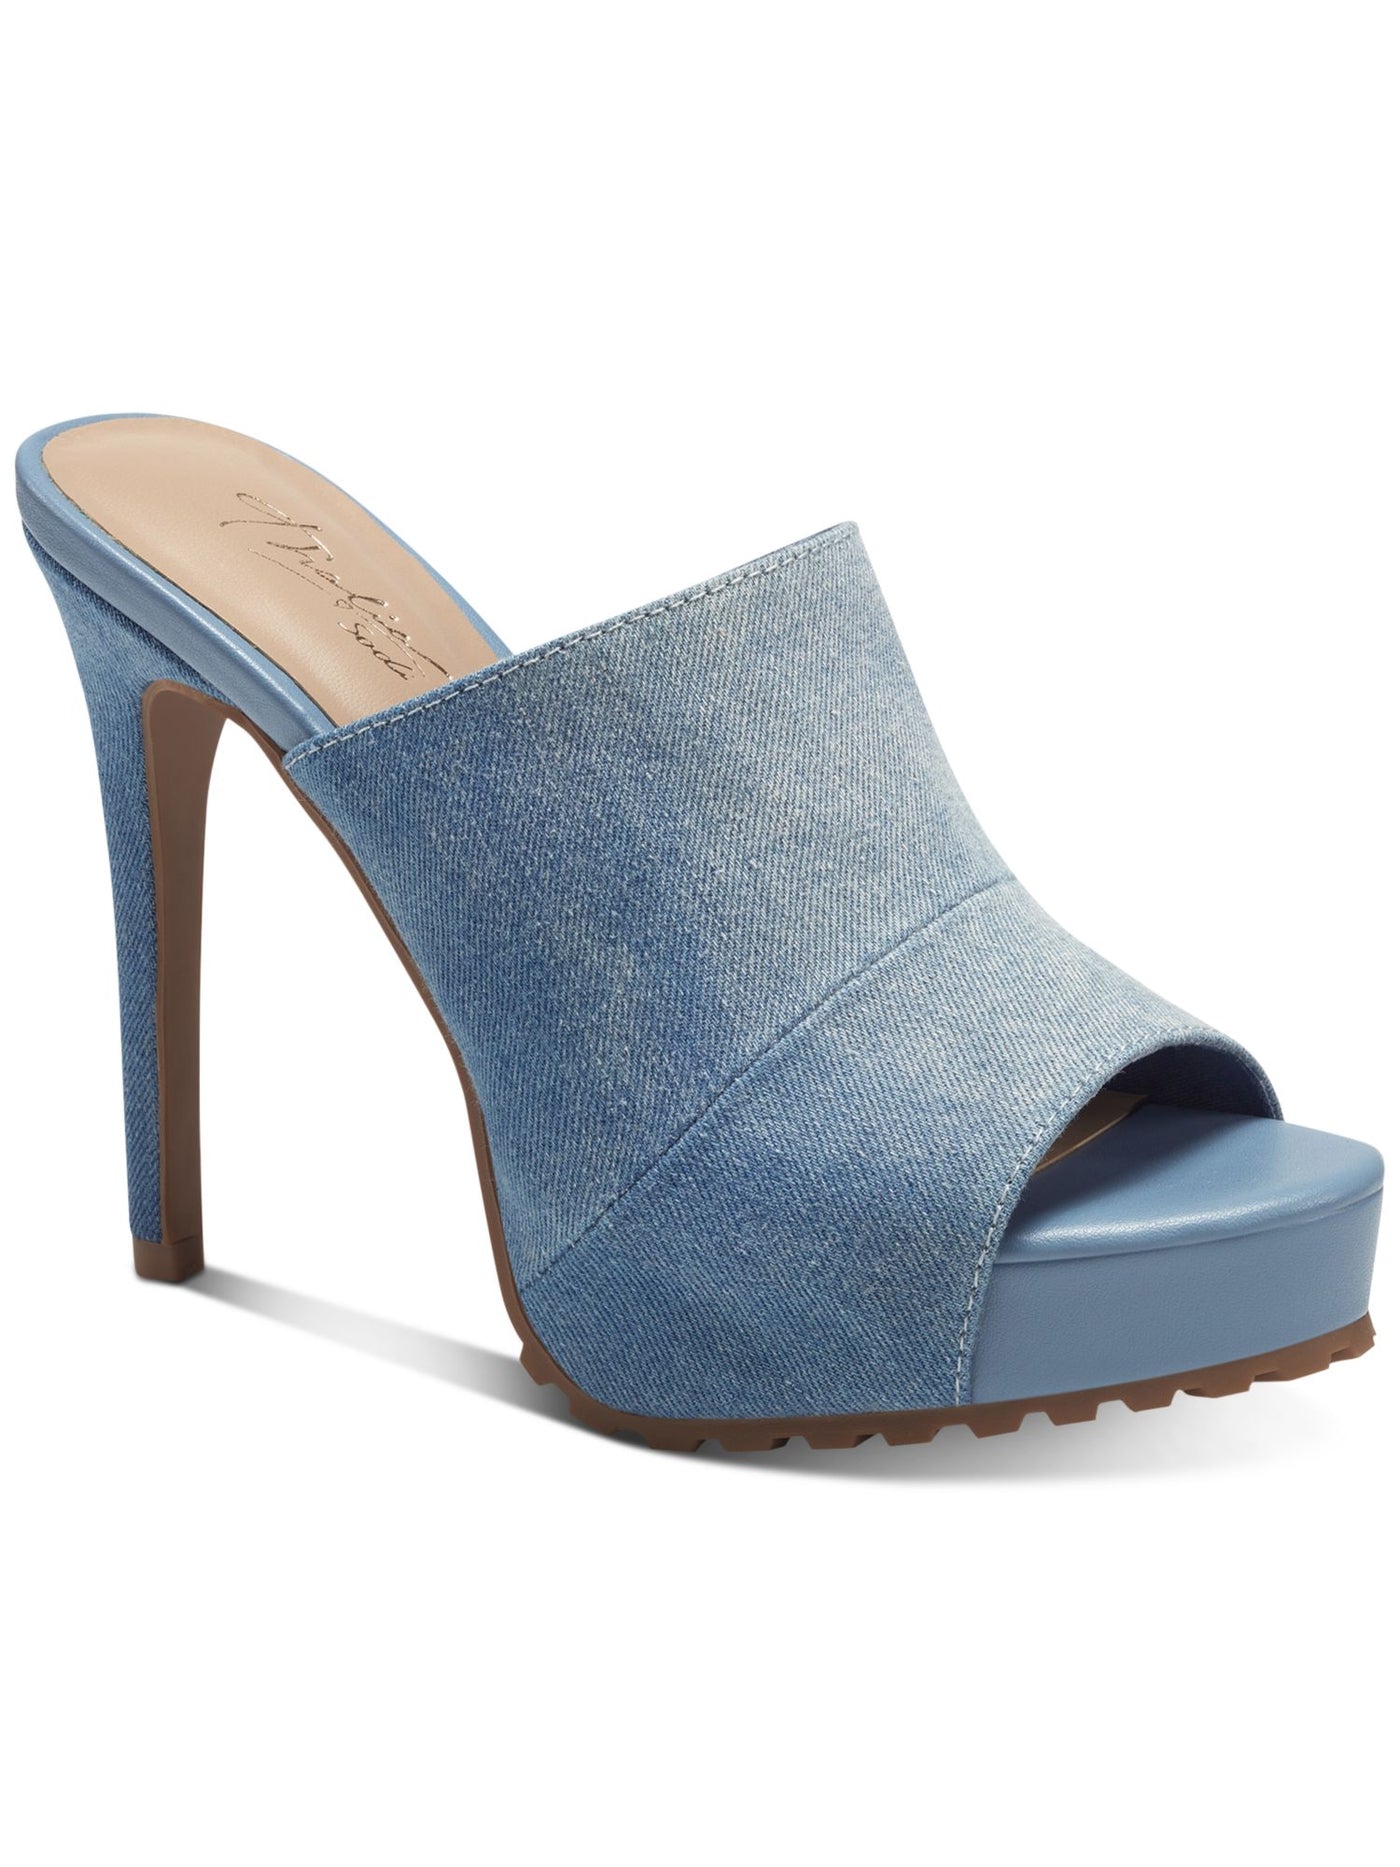 THALIA SODI Womens Blue 1" Platform Lug Sole Cindie Round Toe Stiletto Slip On Heeled Sandal 8.5 M